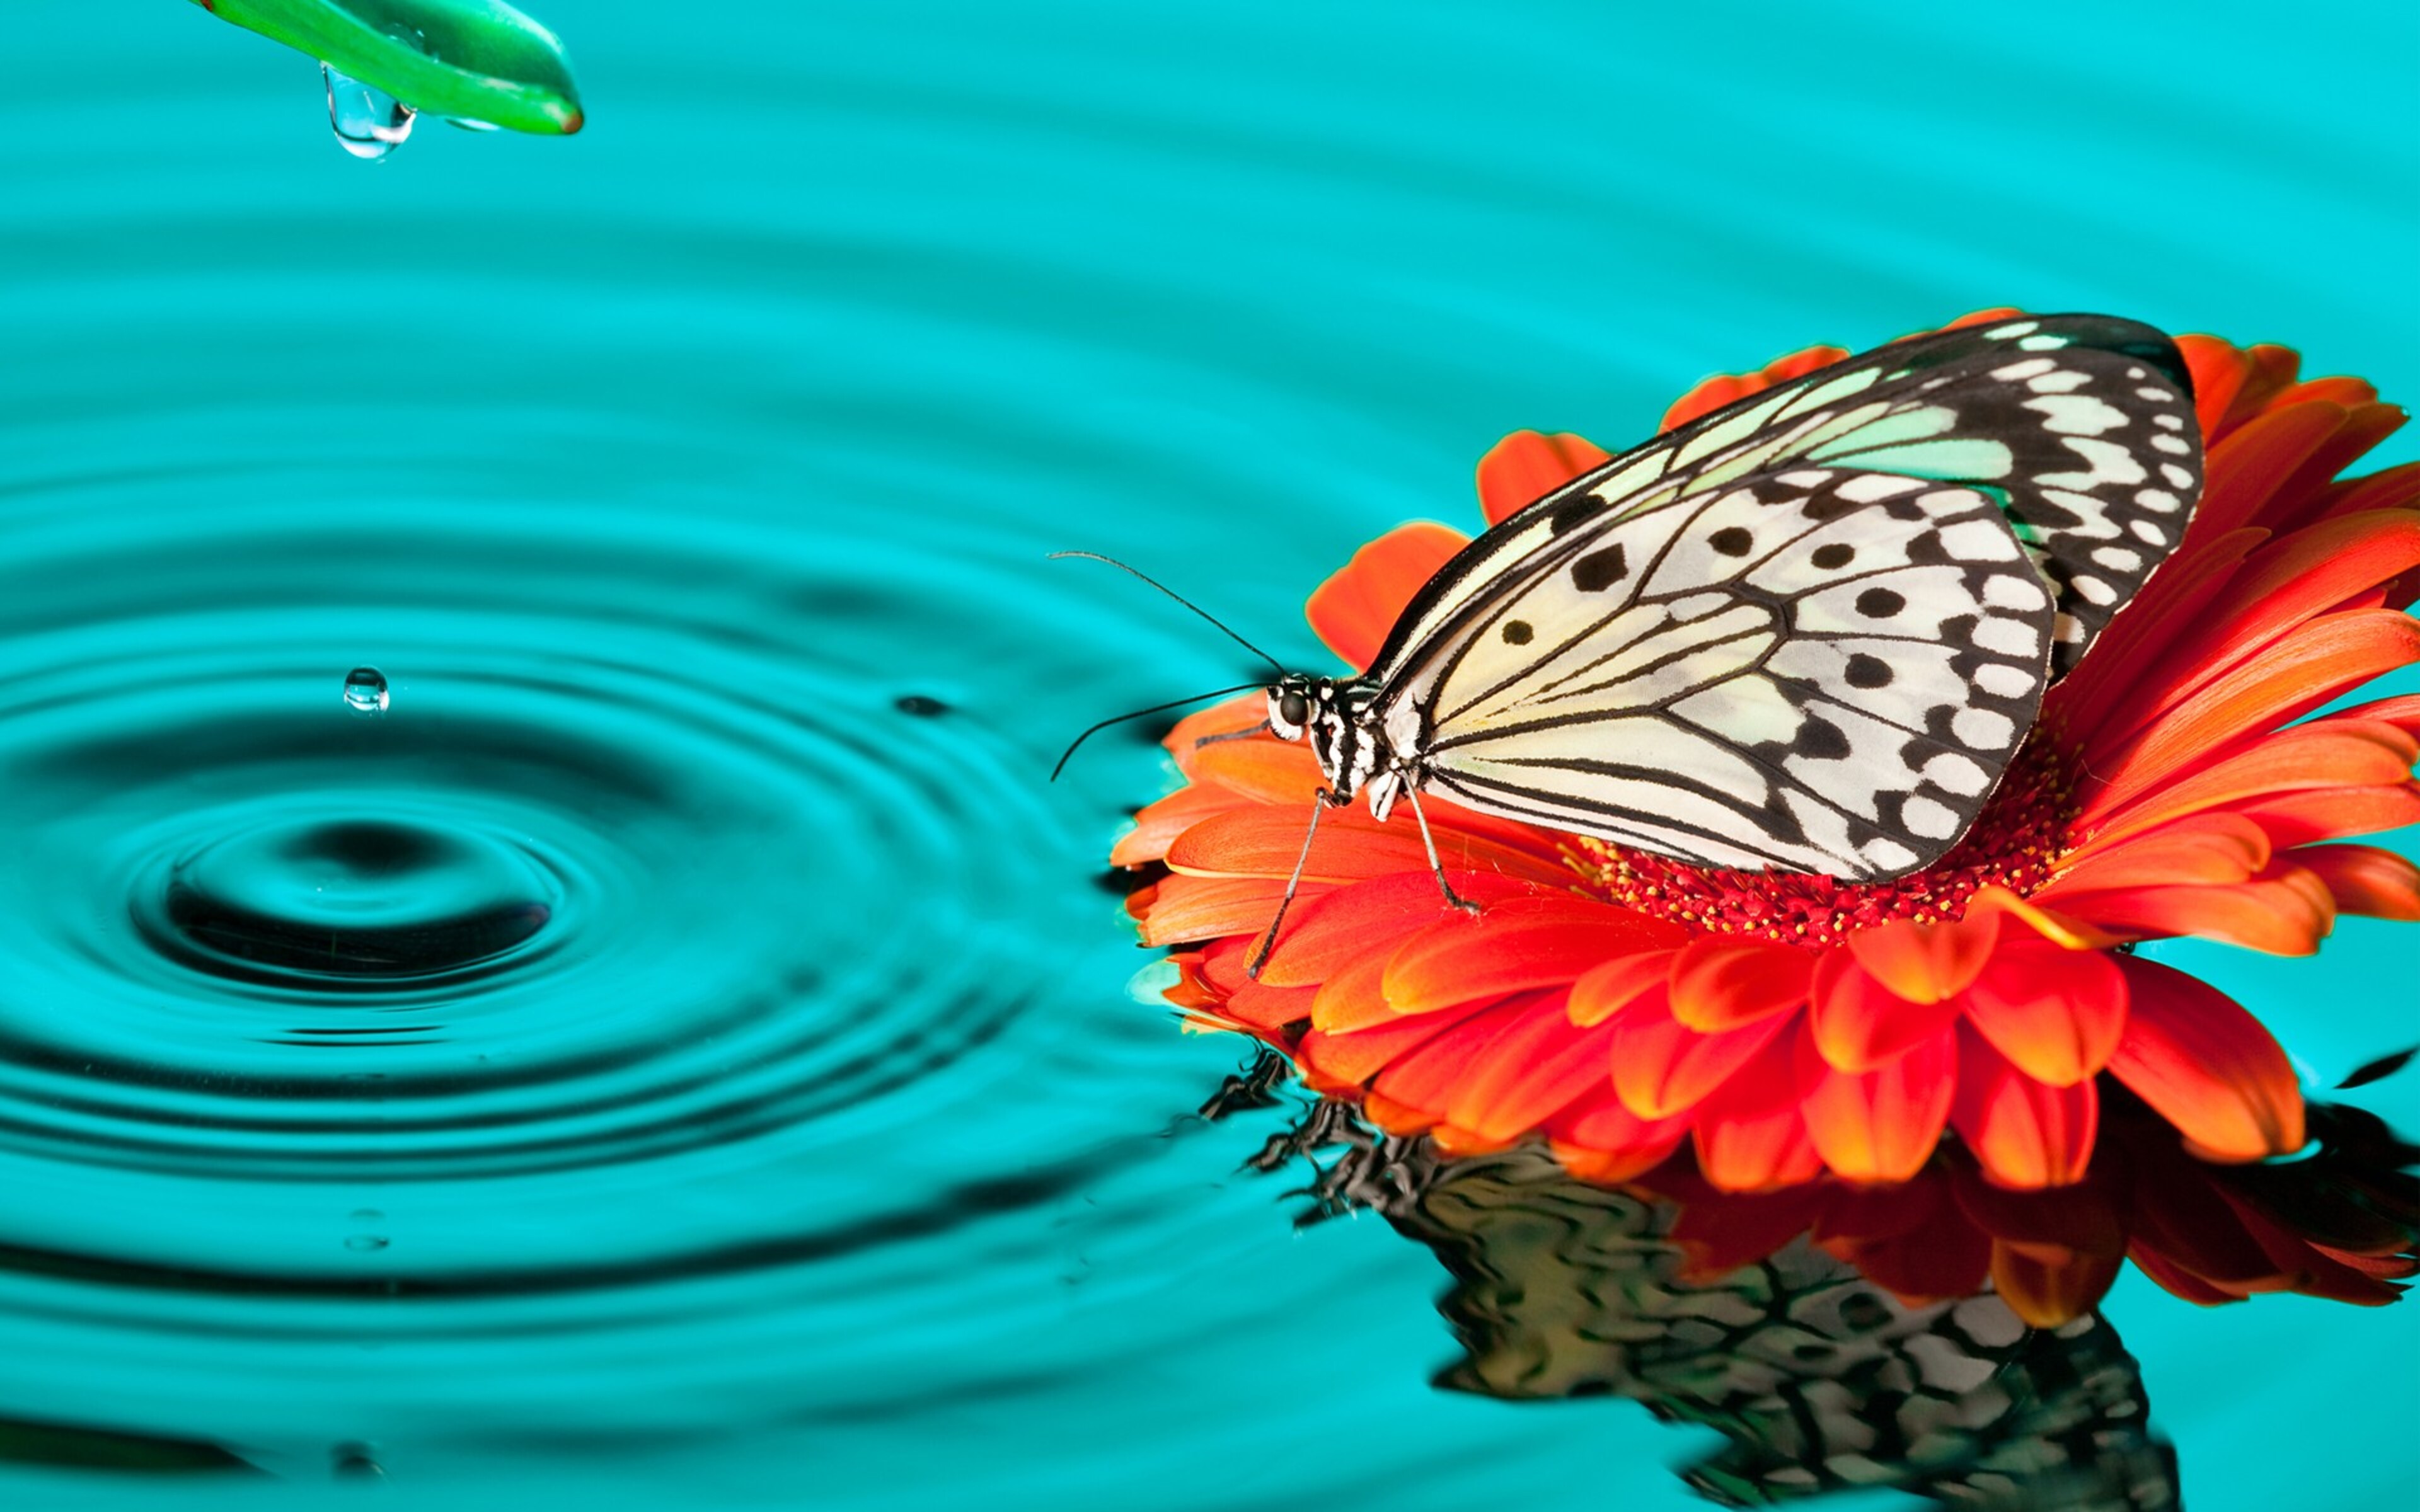 Картинки на телефон на заставку. Бабочка на цветке. Бабочка на гербере. Бабочка на воде. Яркие цветы и бабочки.